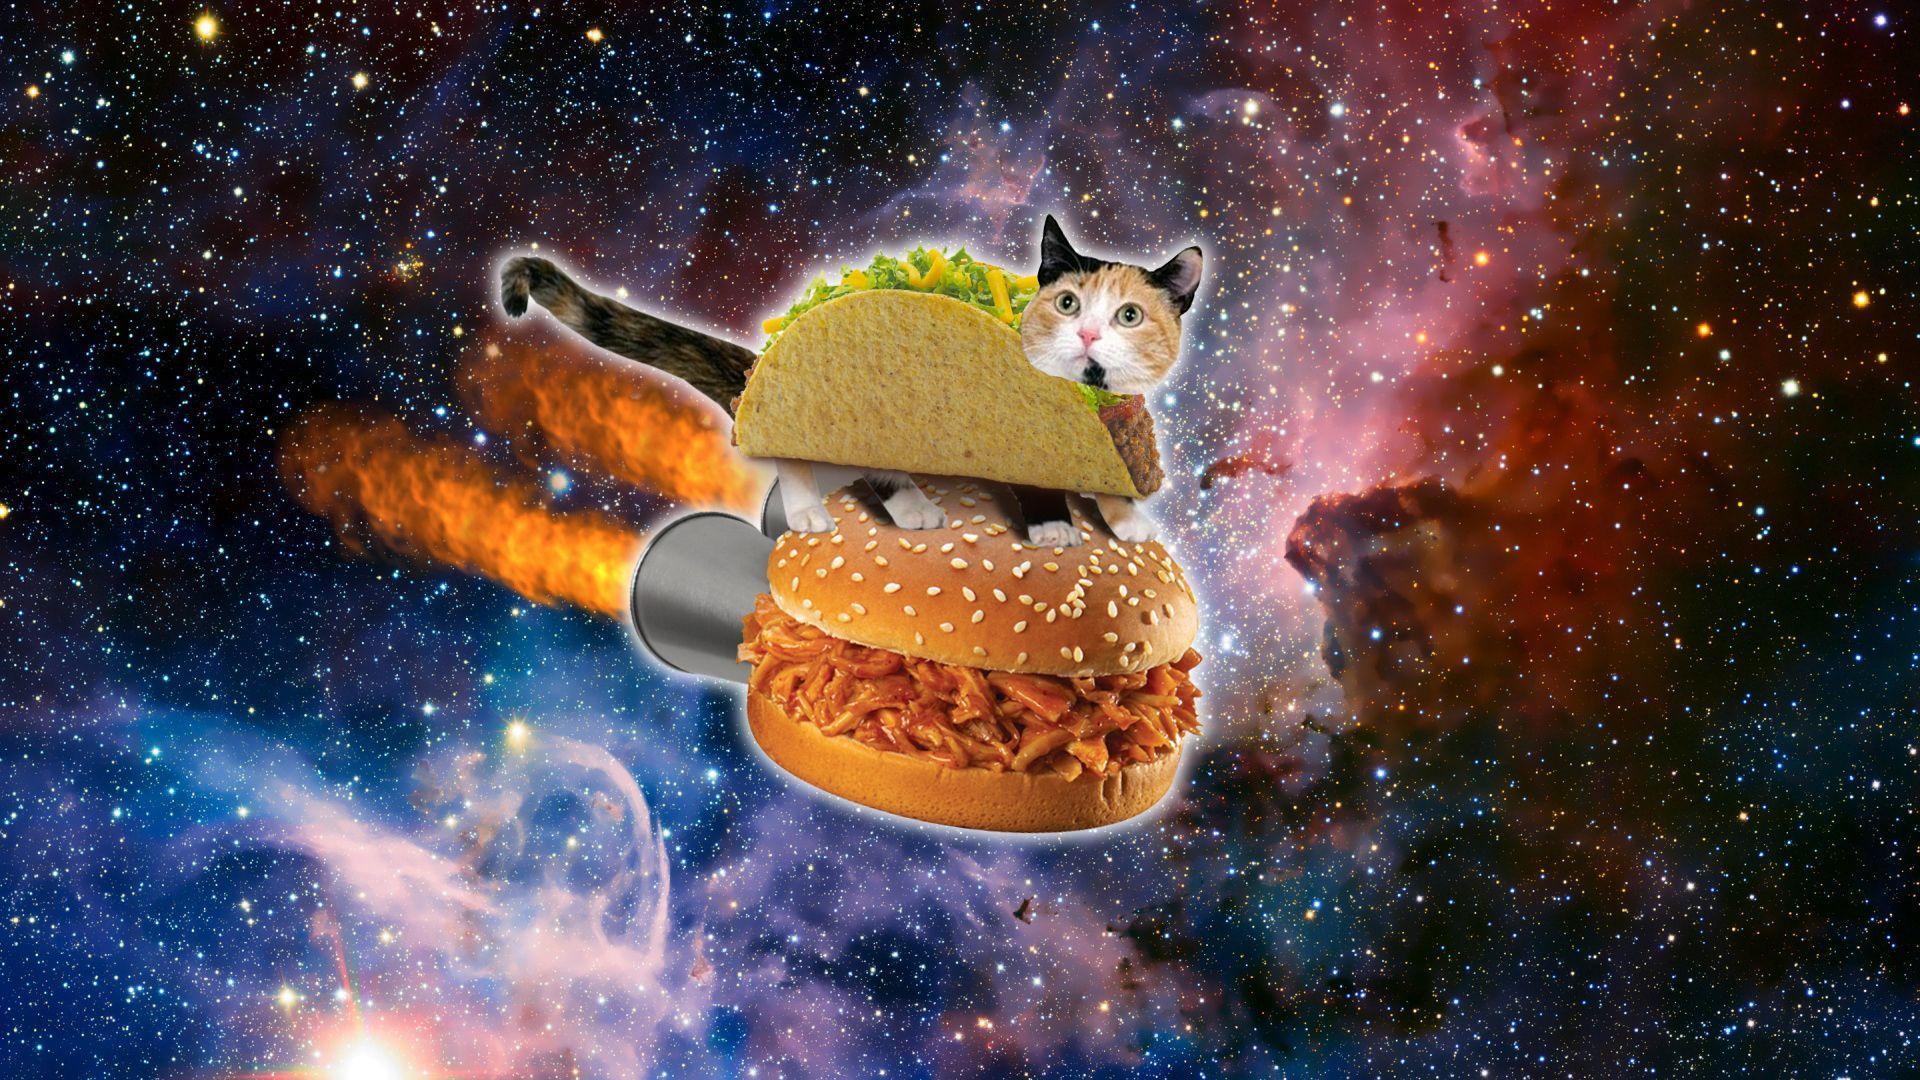 Space Cat Wallpaper Mobile. wa. Space cat, Cat